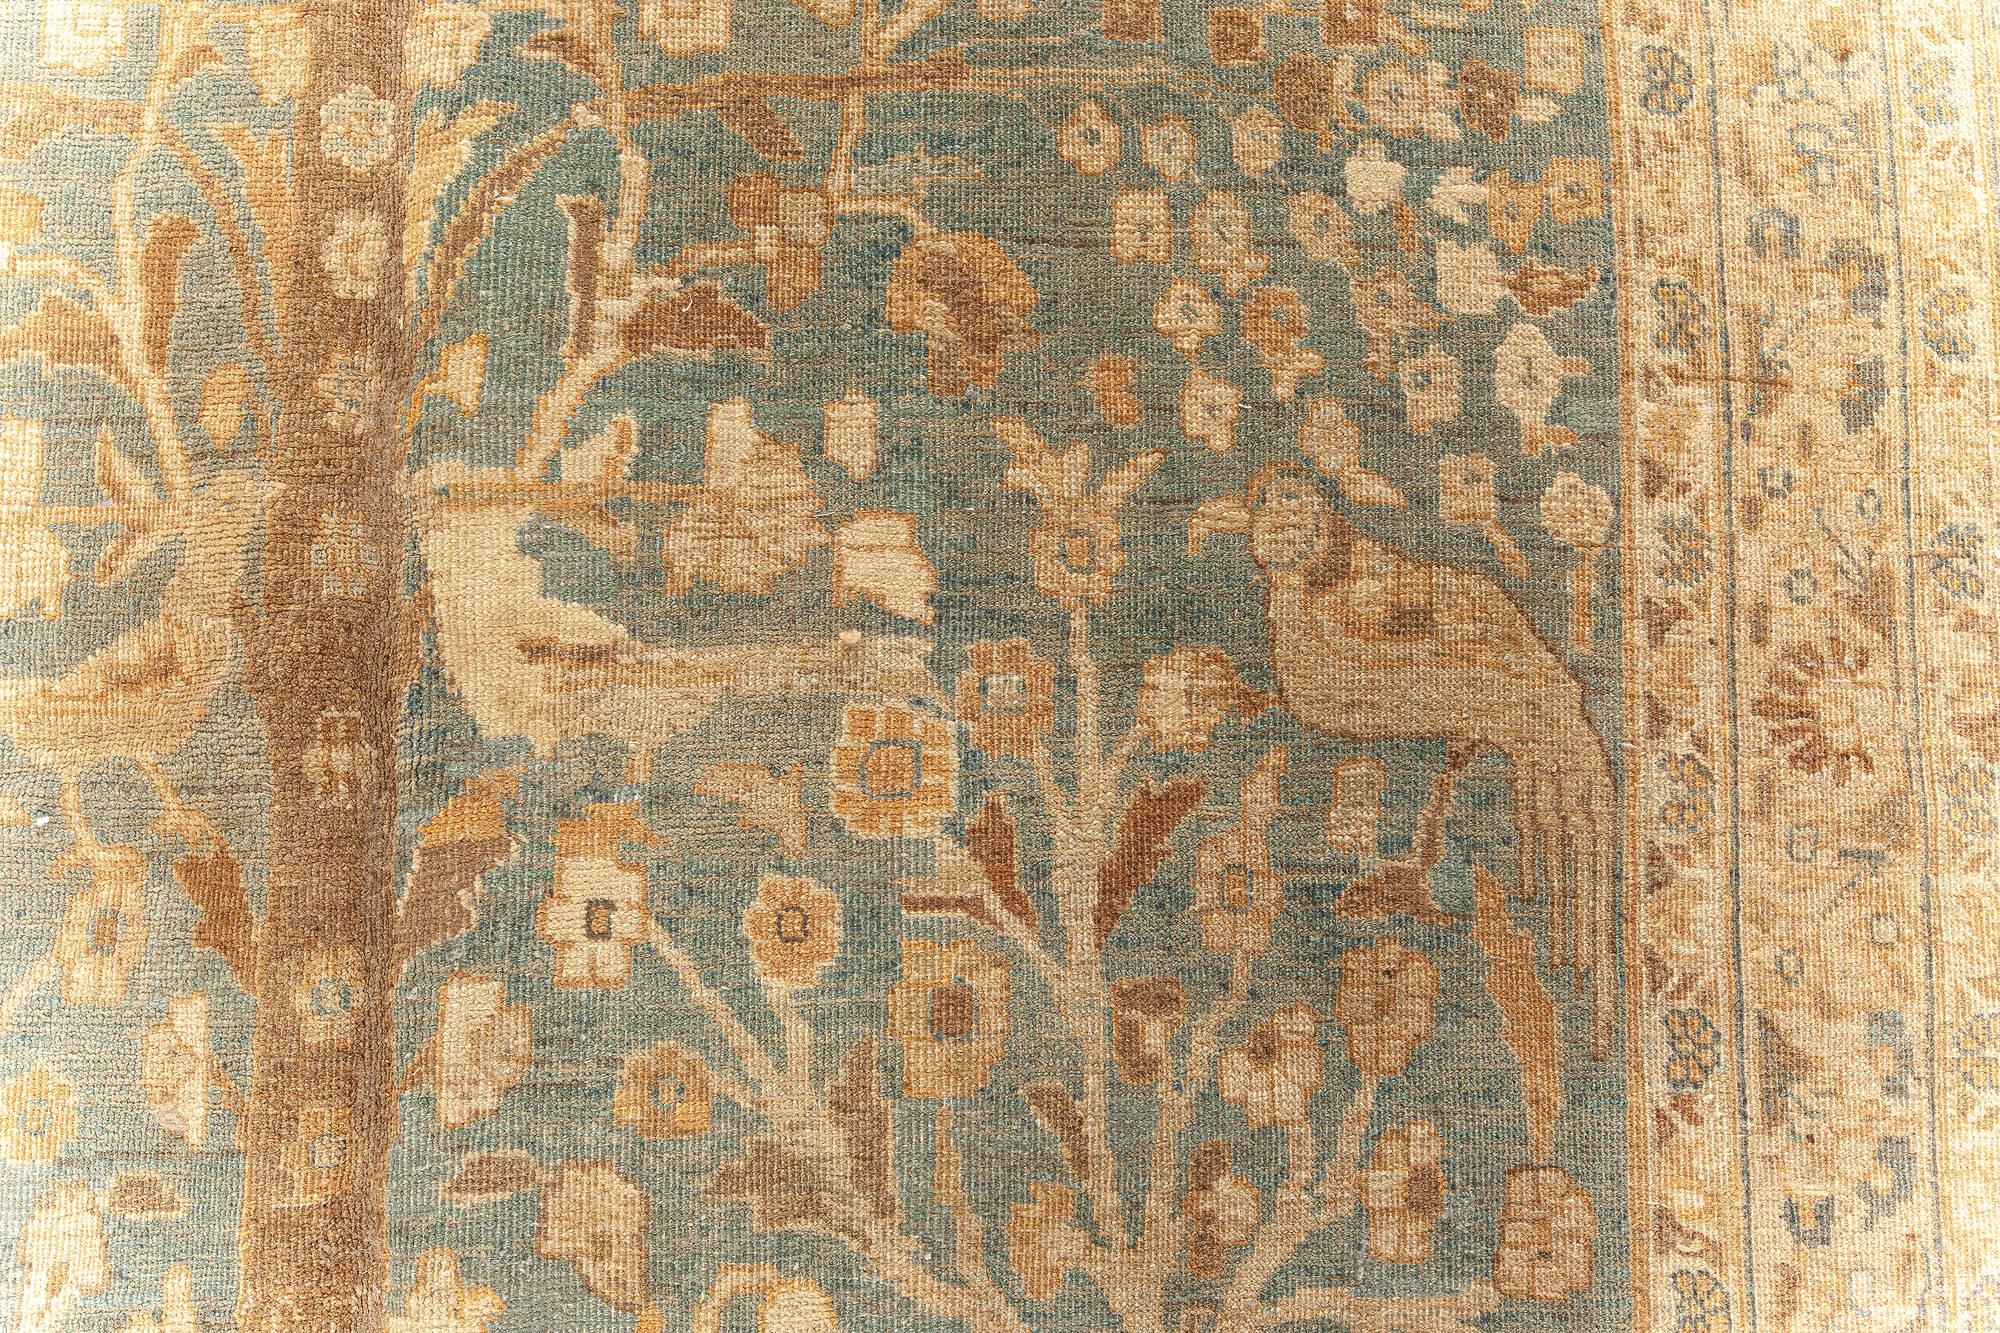 Antique Persian Khorassan handmade wool rug
Size: 6'10